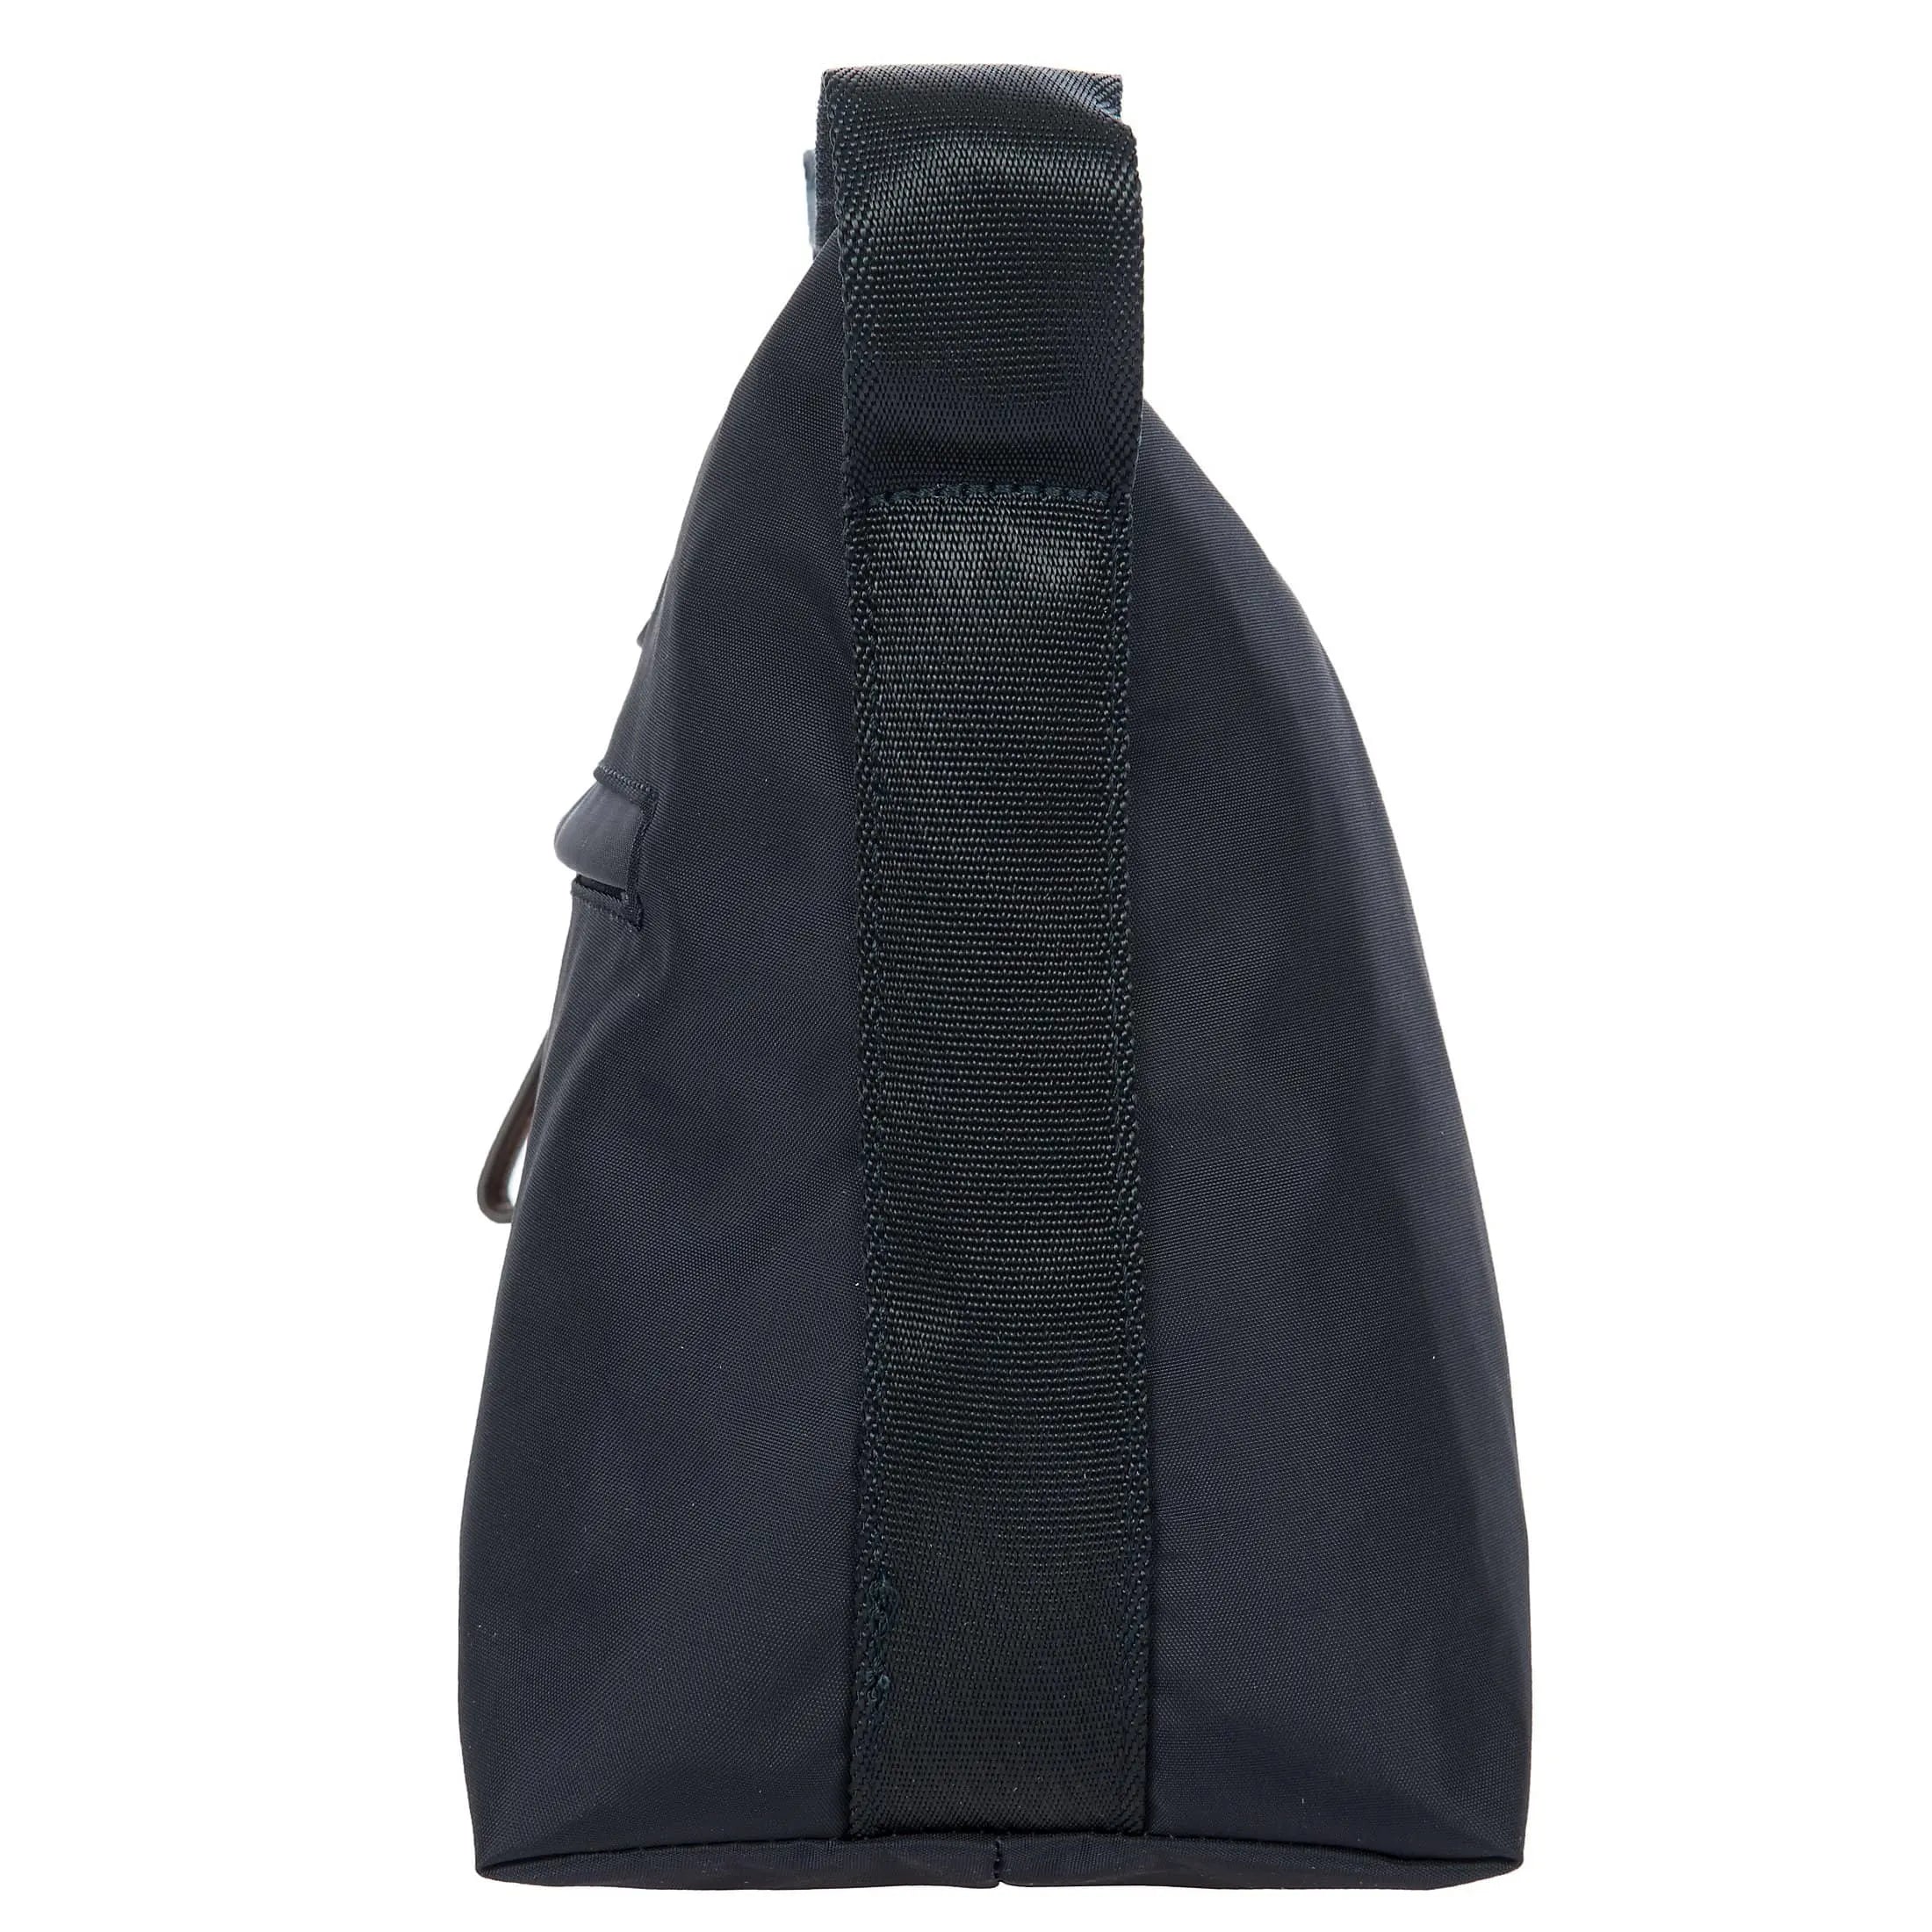 Brics X-Bag shoulder bag 25 cm - Sahara